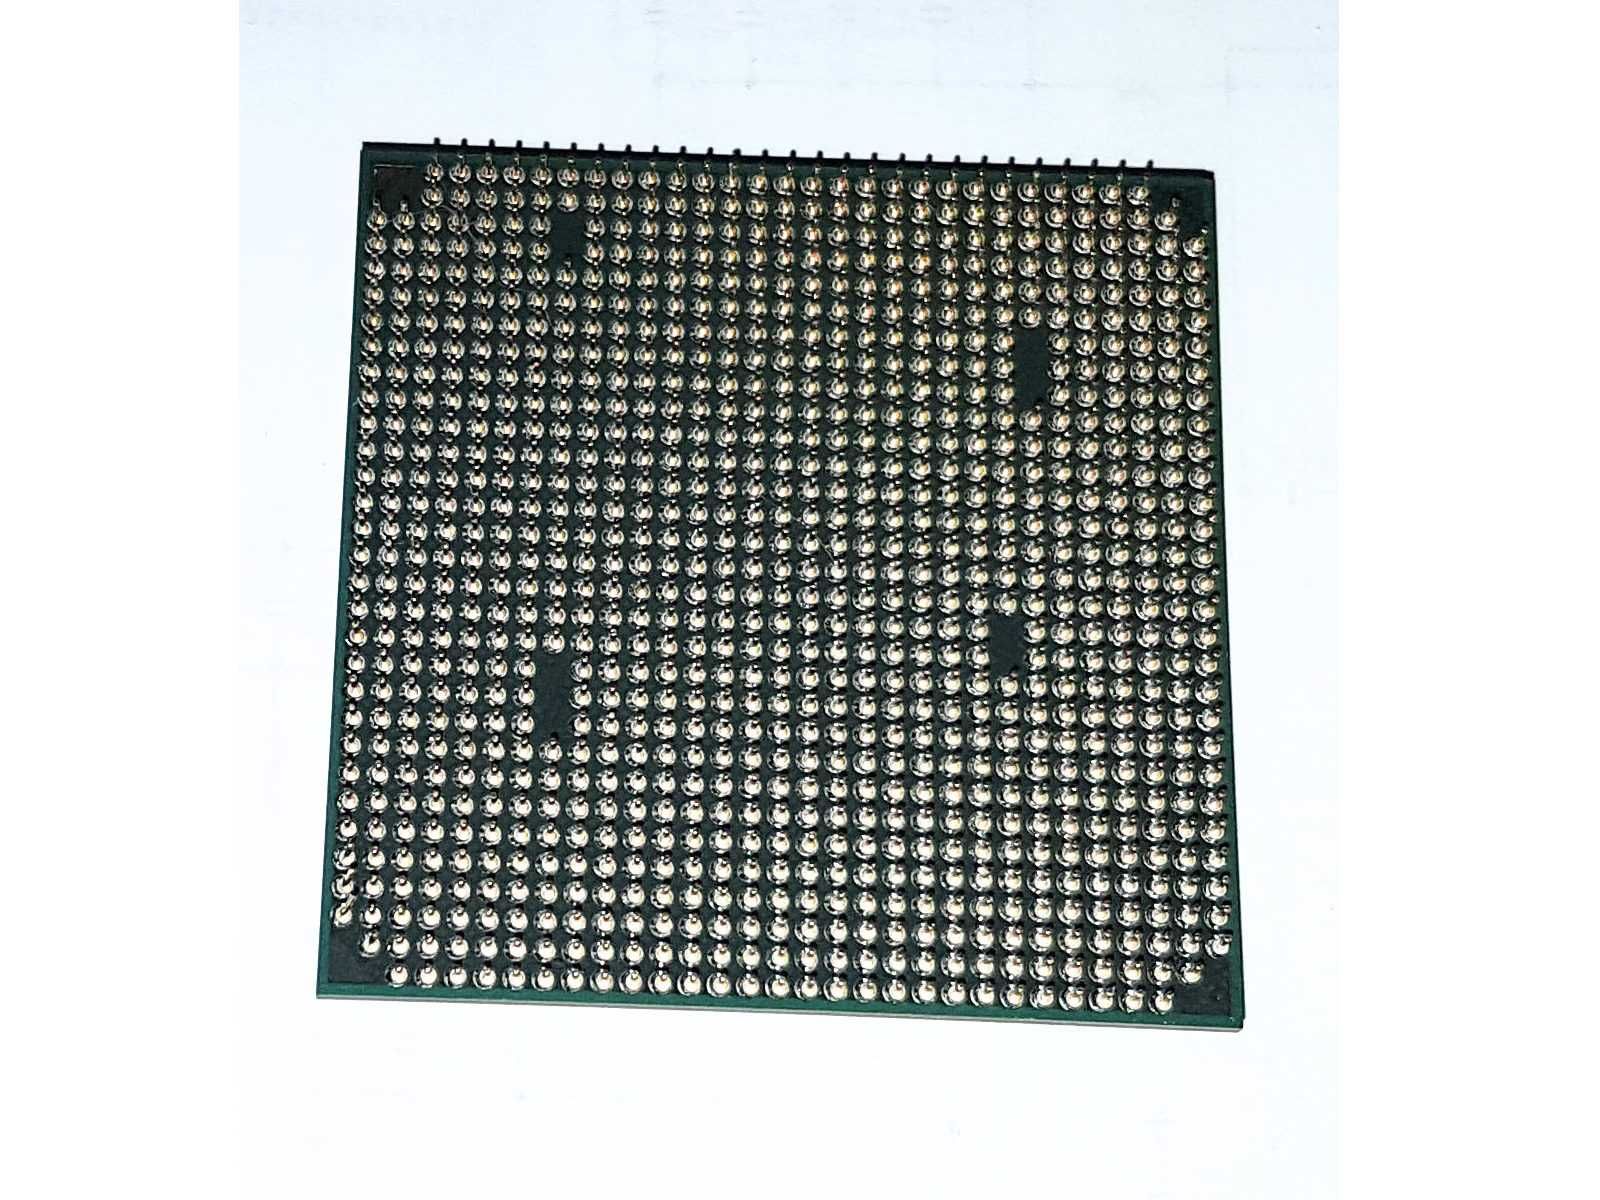 Procesor AMD Phenom X4 965 BE black edition AM3